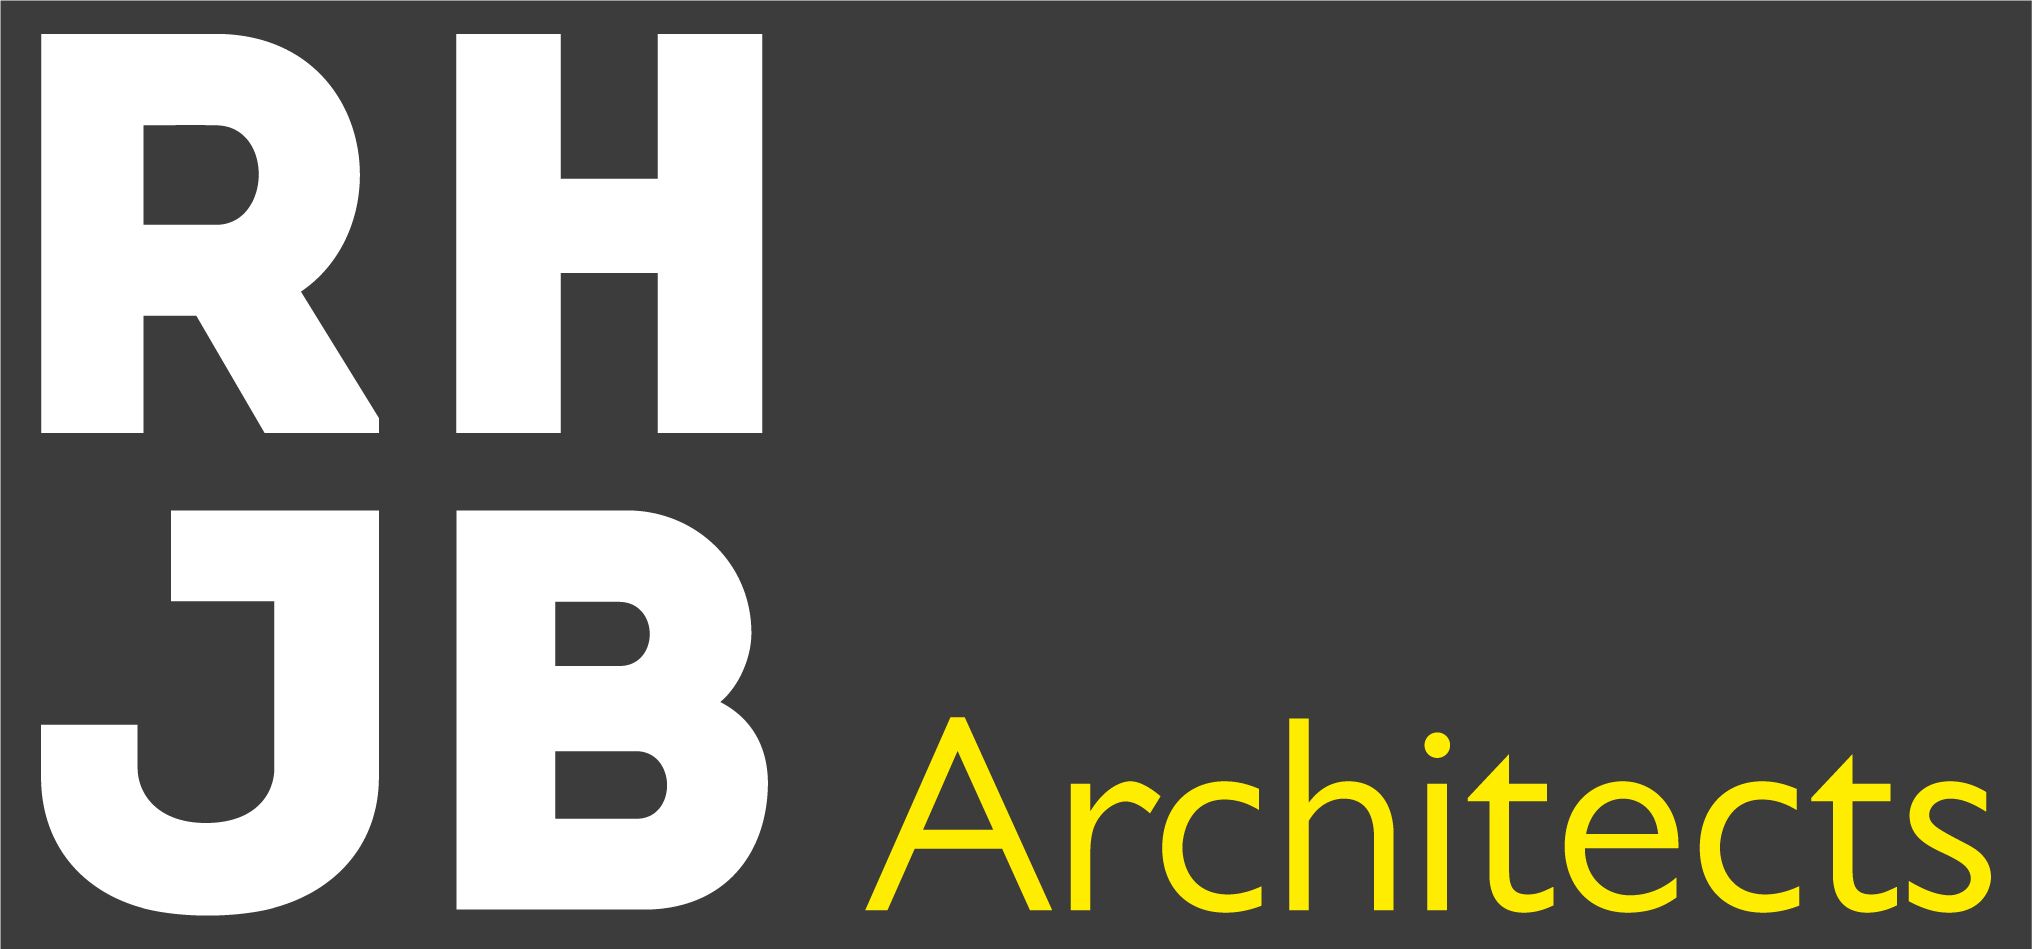 RHJB Architects